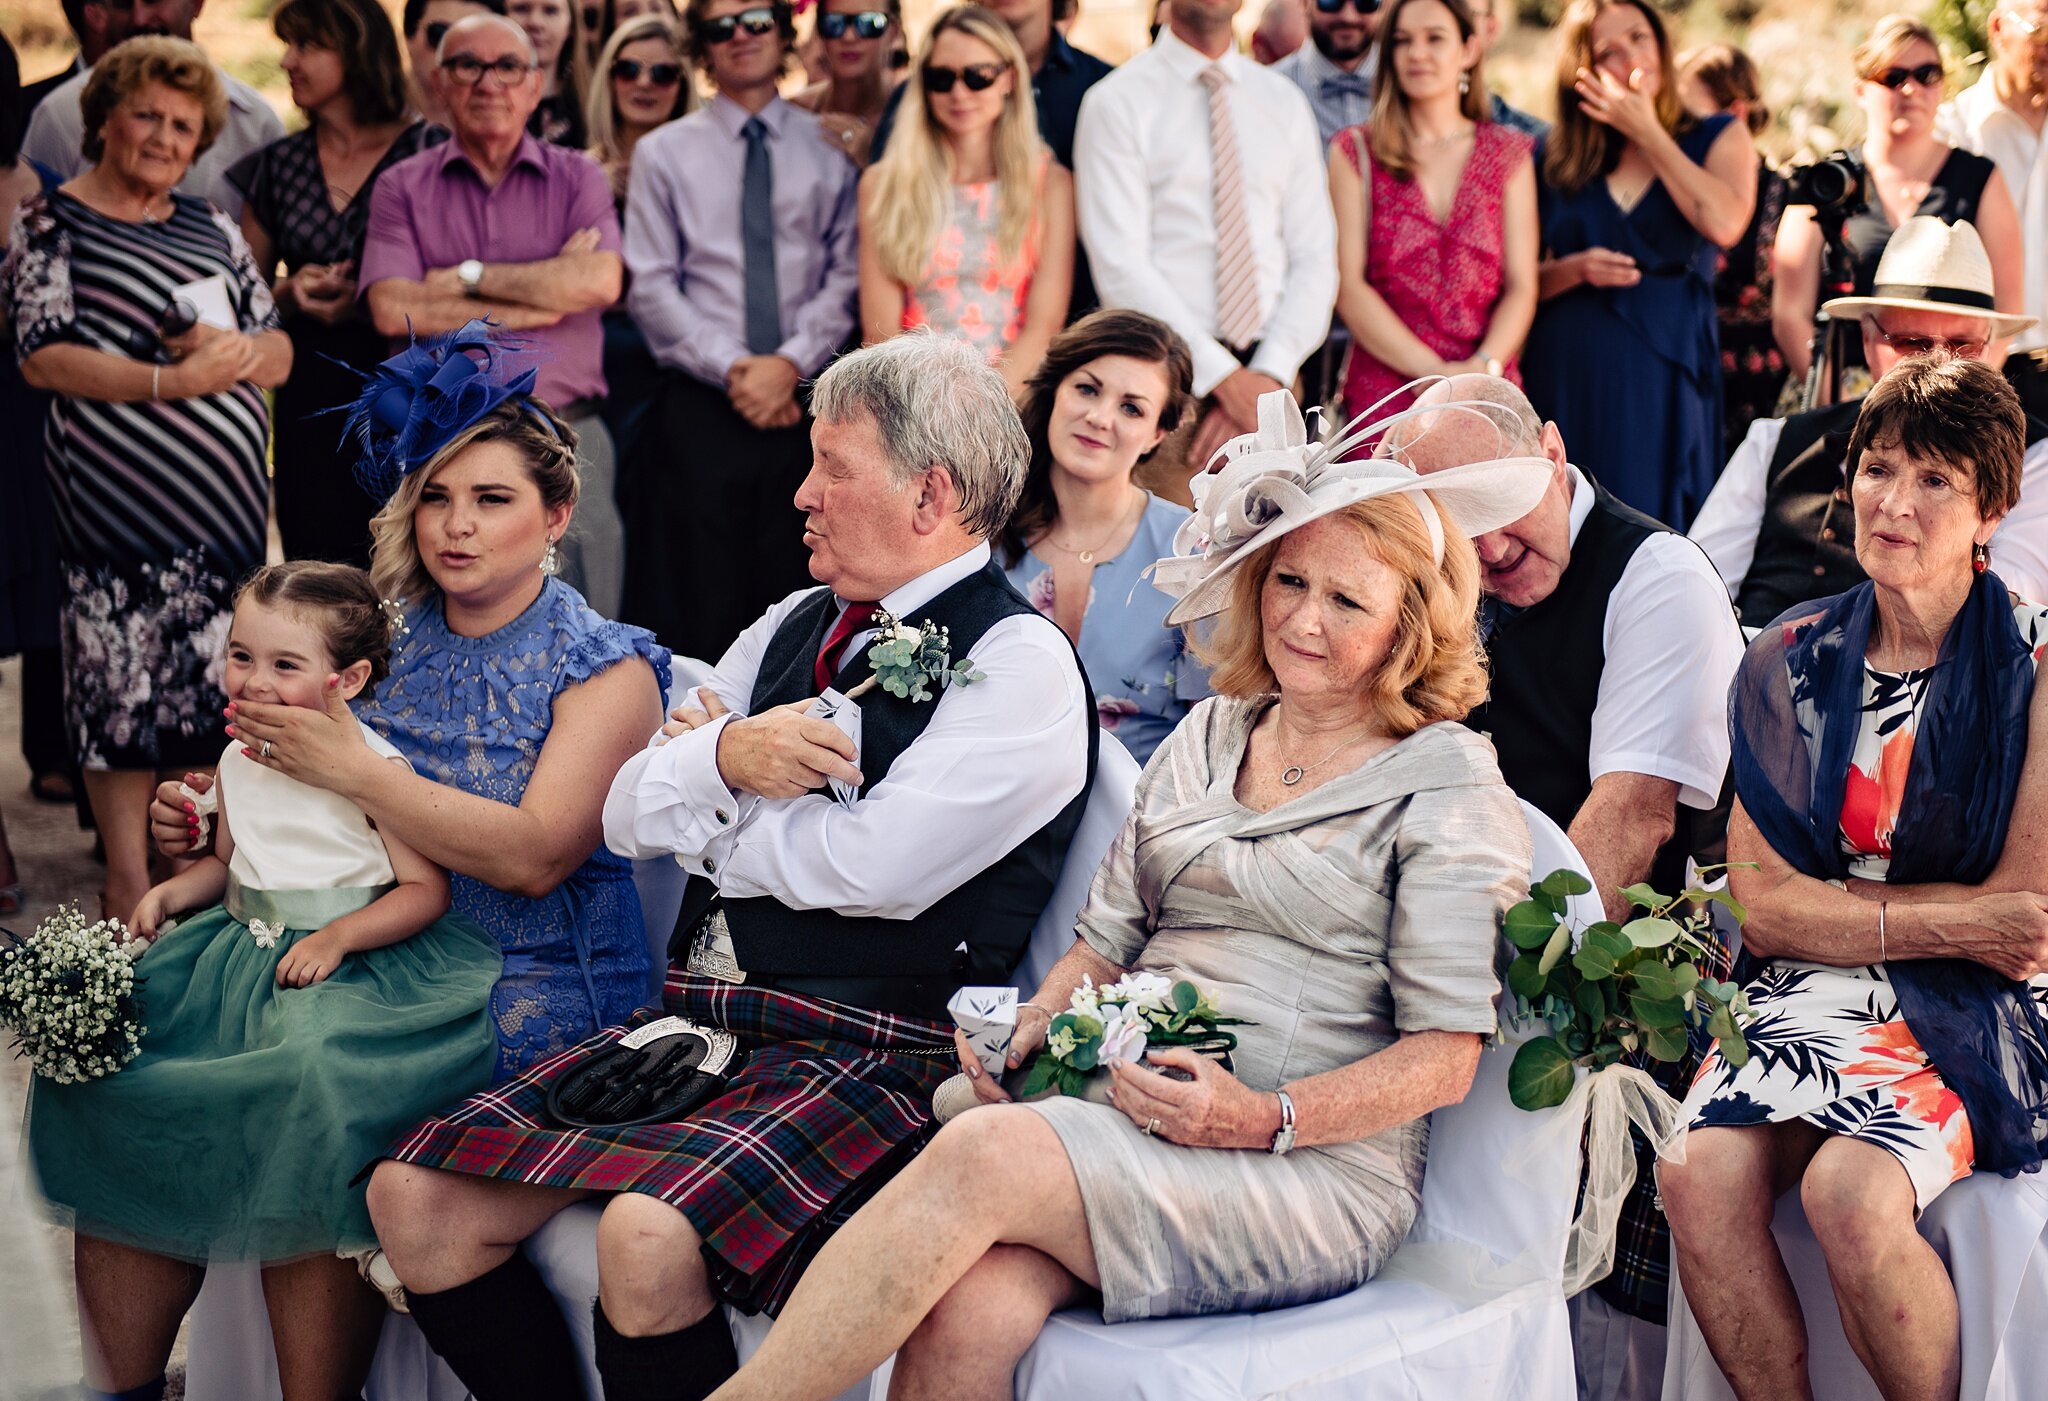 Wedding Ceremony at the Olive Gardens Mdina - Wedding Photography Malta - Shane P. Watts Photography